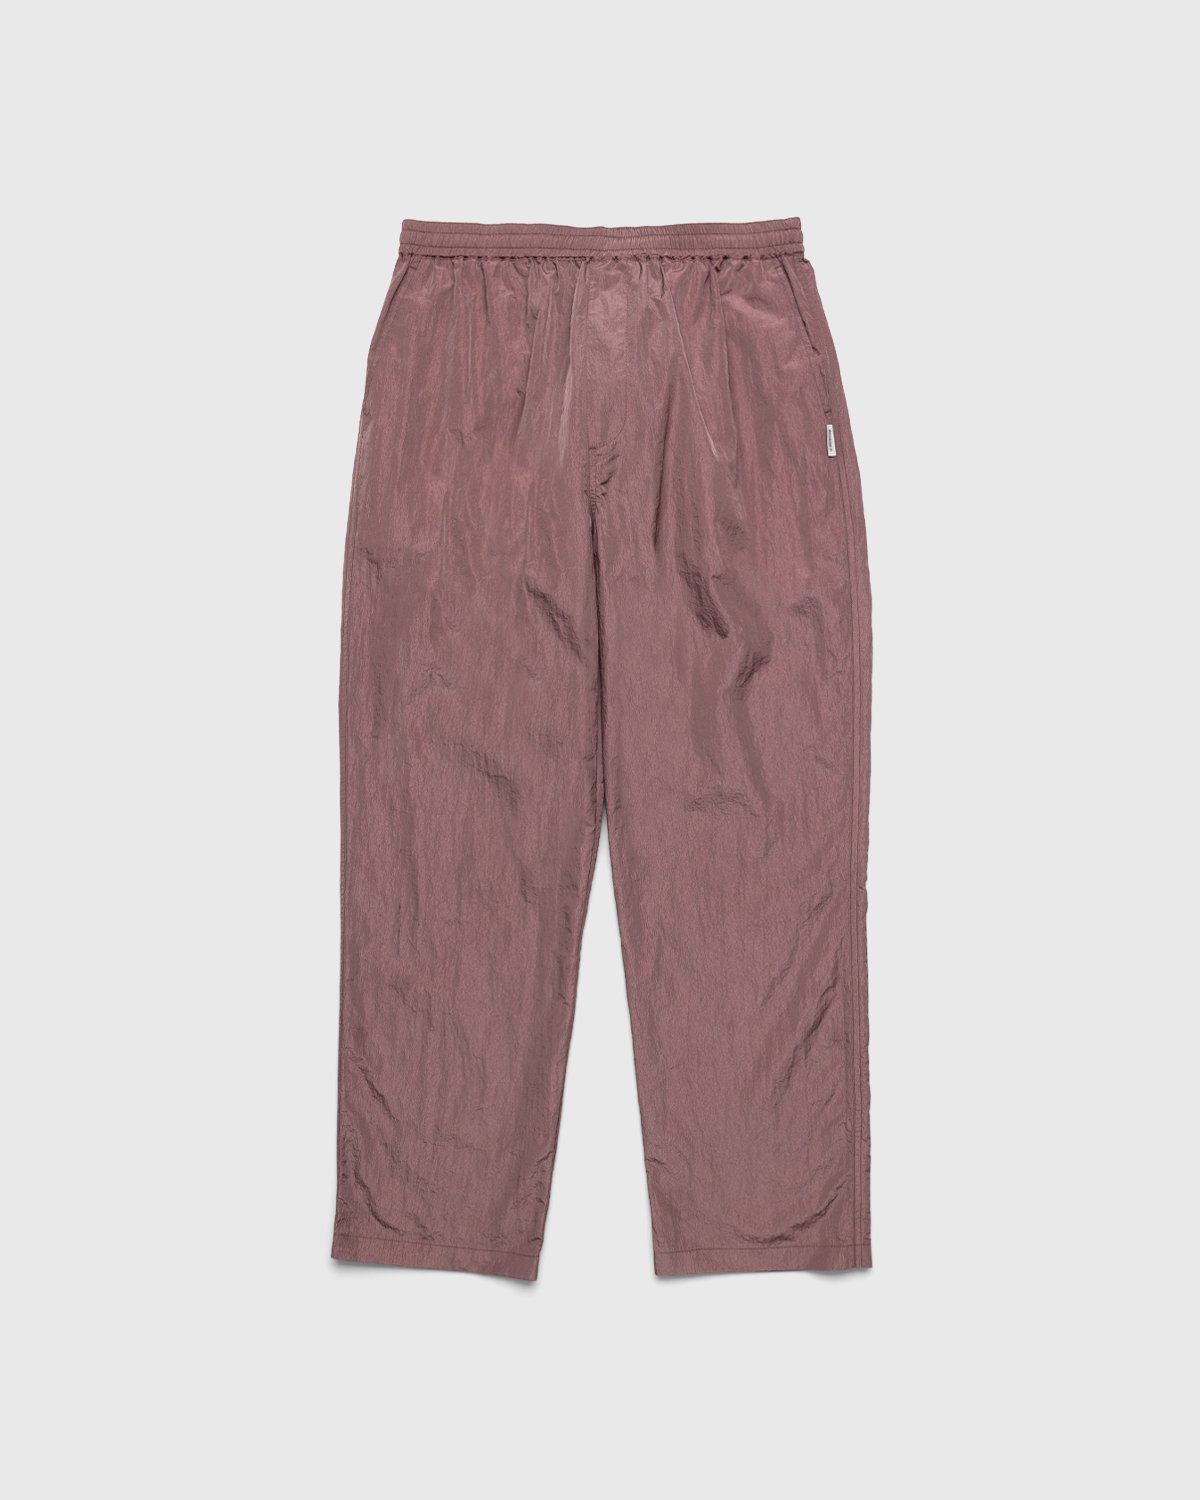 Highsnobiety – Crepe Nylon Elastic Pants Rose Gold - Pants - Pink - Image 1